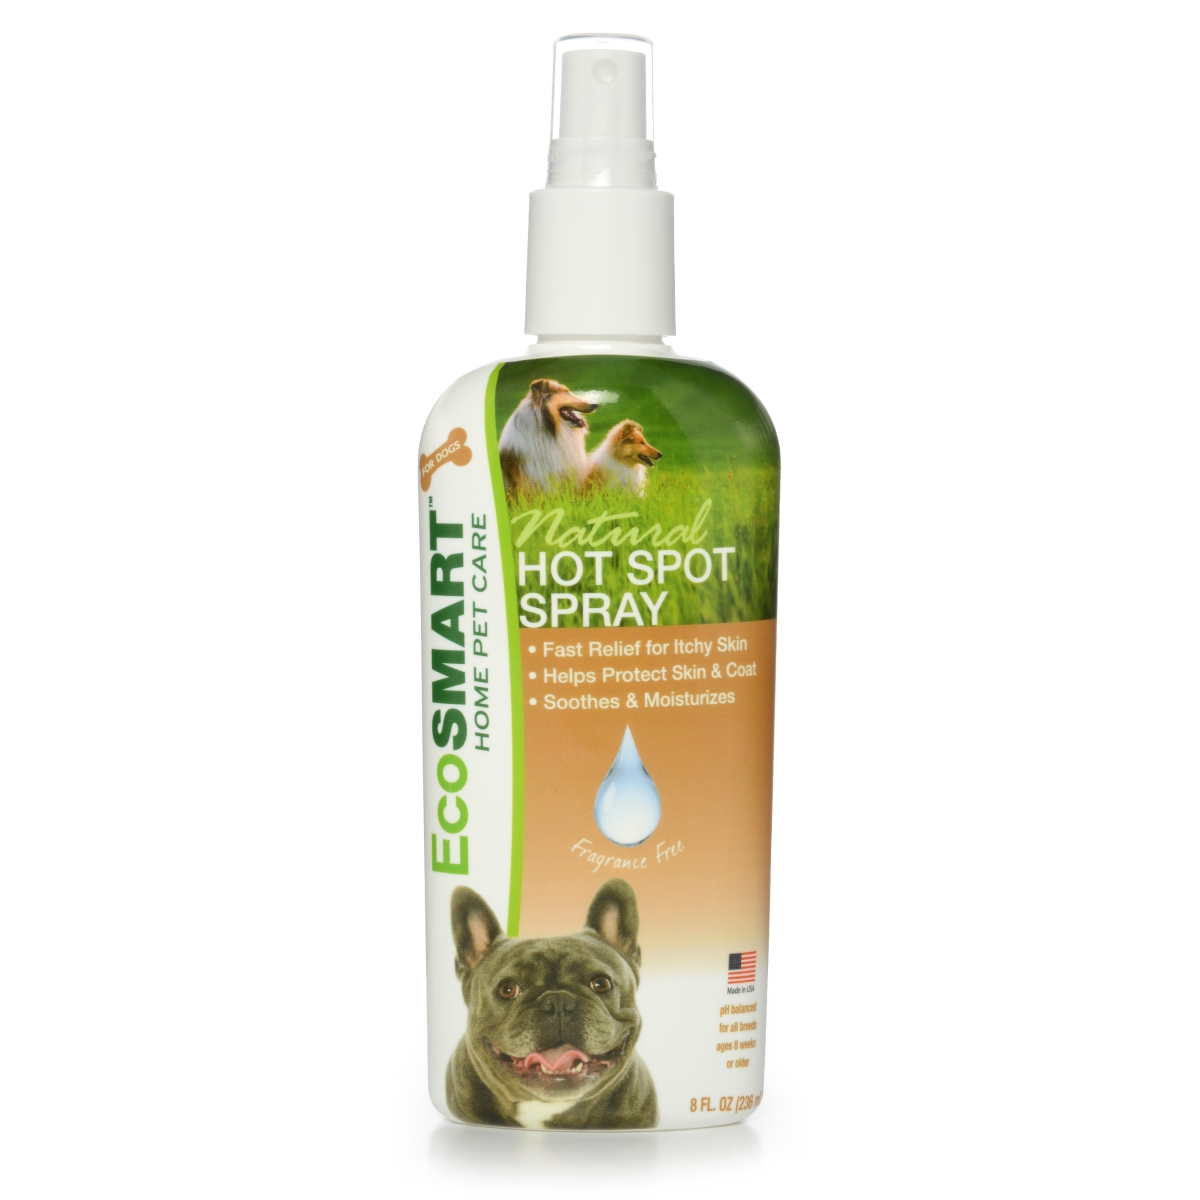 Ecsm-33253-06 8 Oz Natural Hot Spot Spray, Pack Of 6